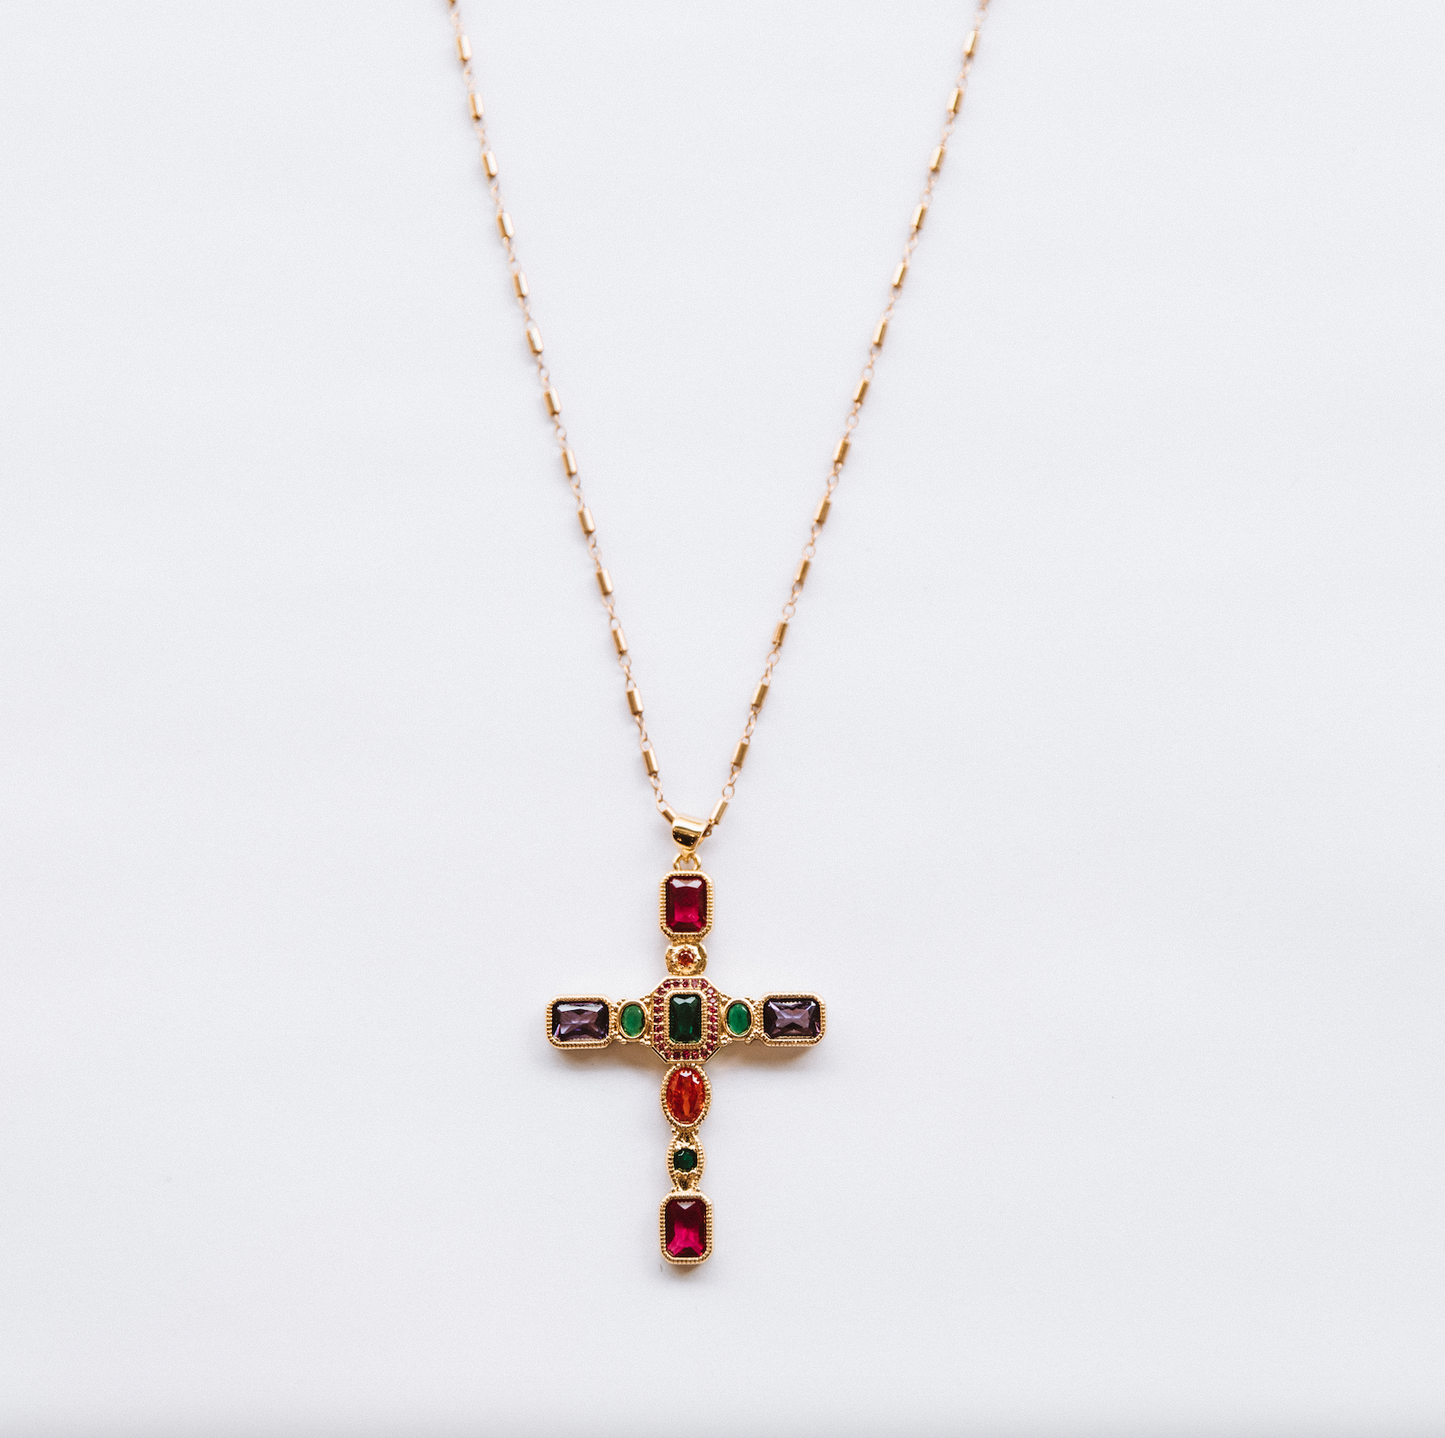 The Treasure Cross Necklace